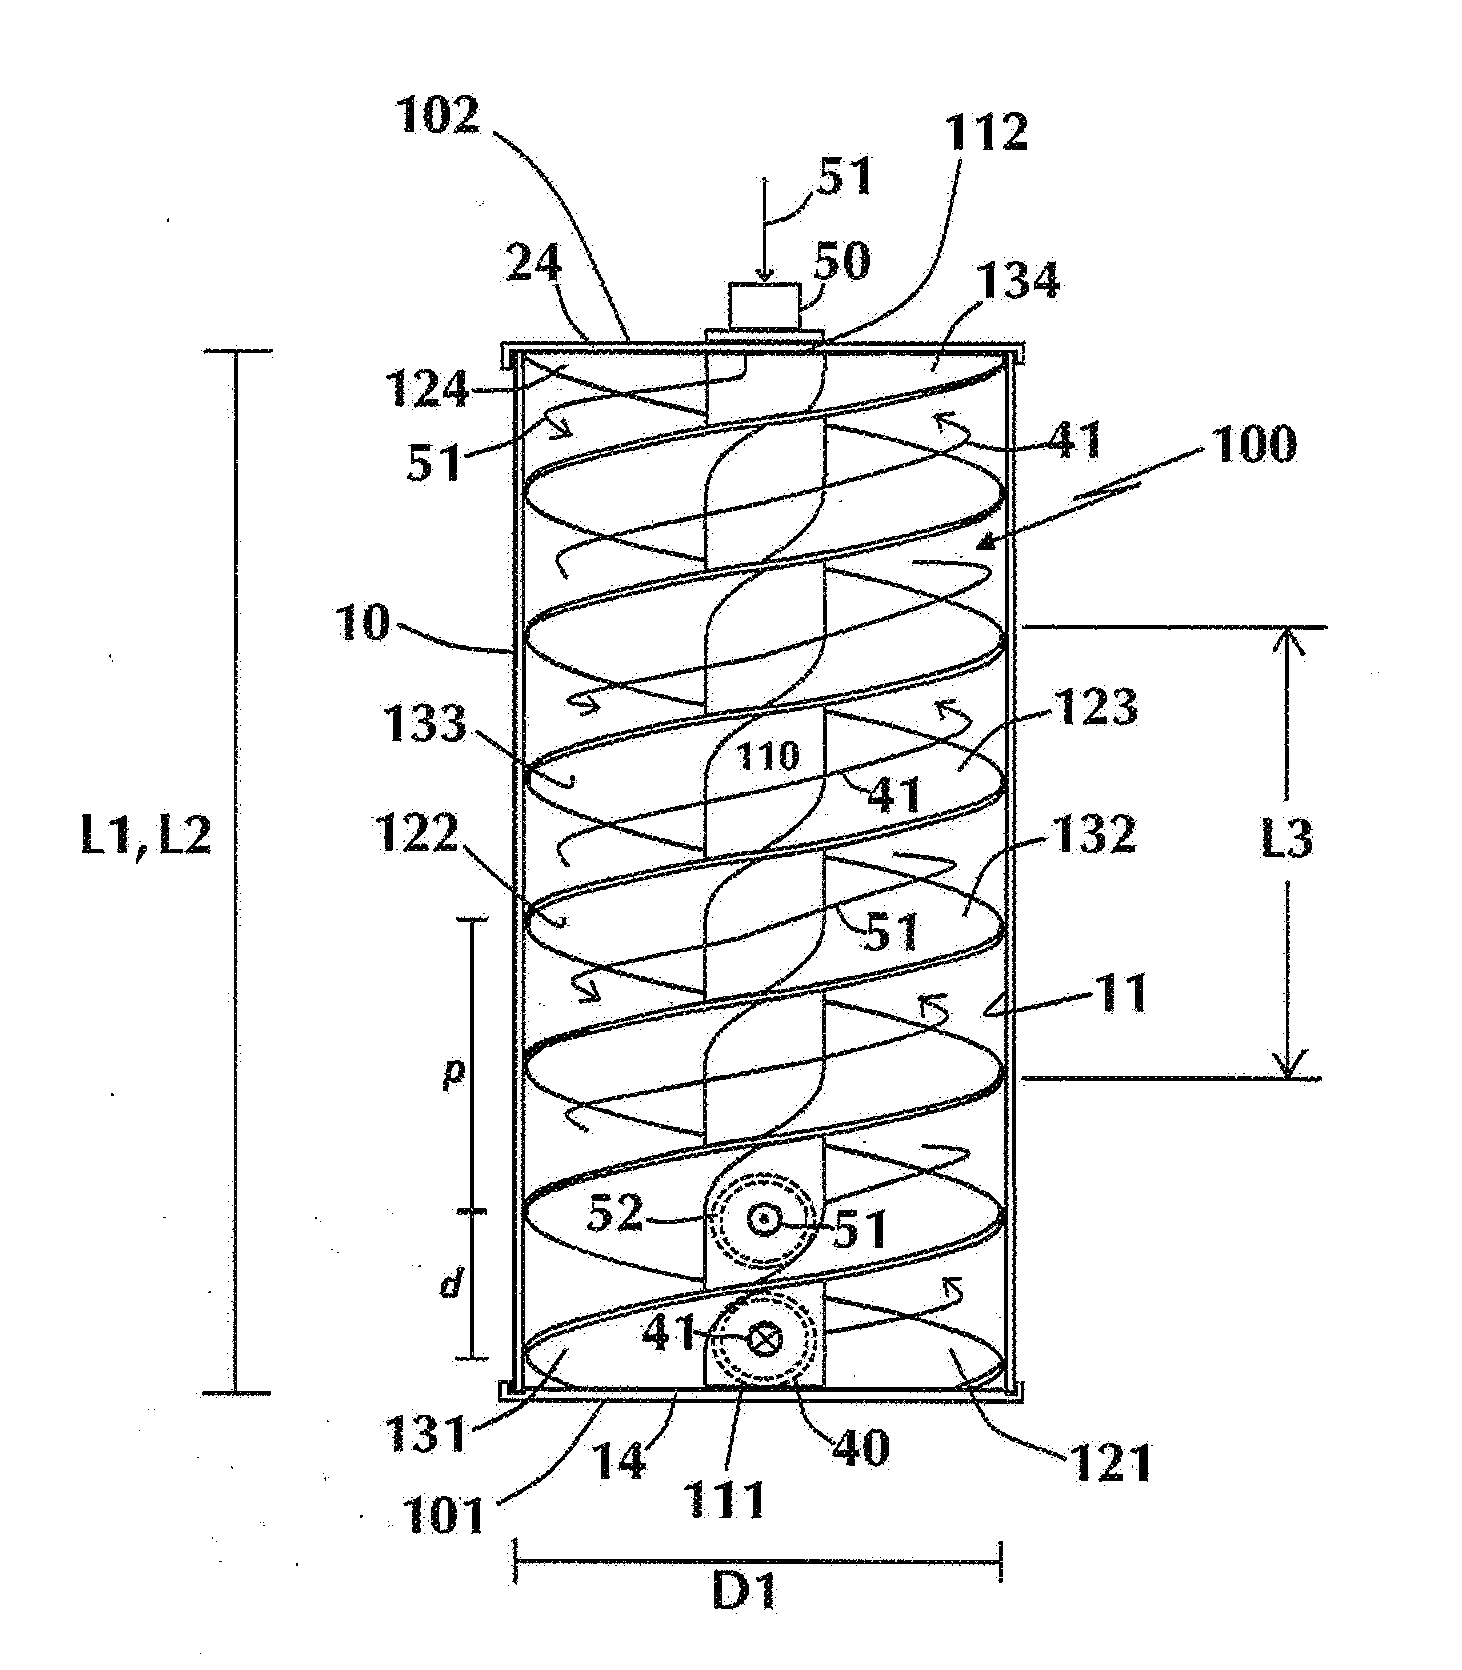 Counterflow helical heat exchanger